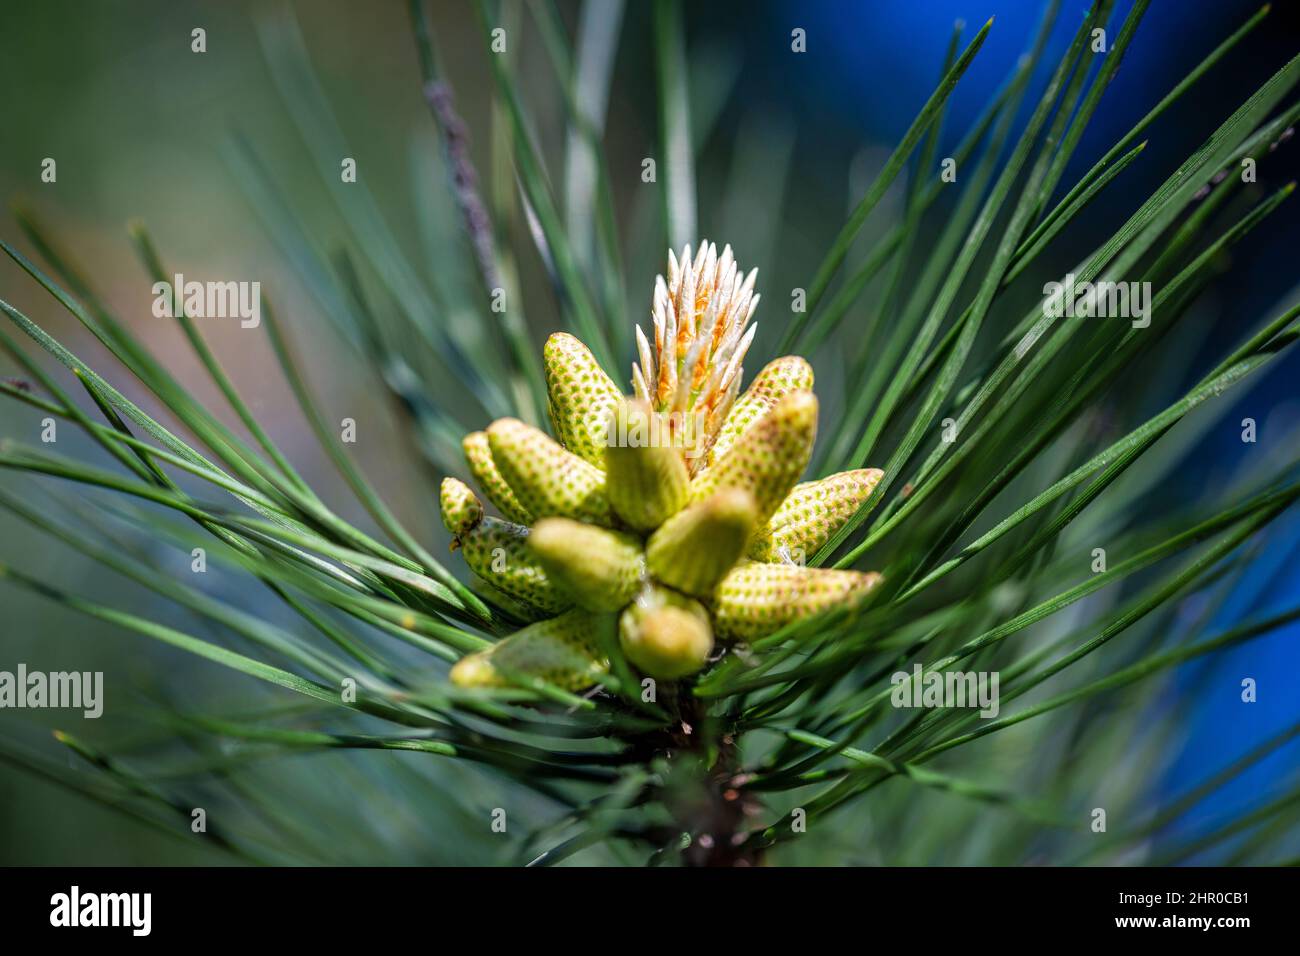 Bog pine, latin name Pinus mugo, male pollen producing strobili. Stock Photo